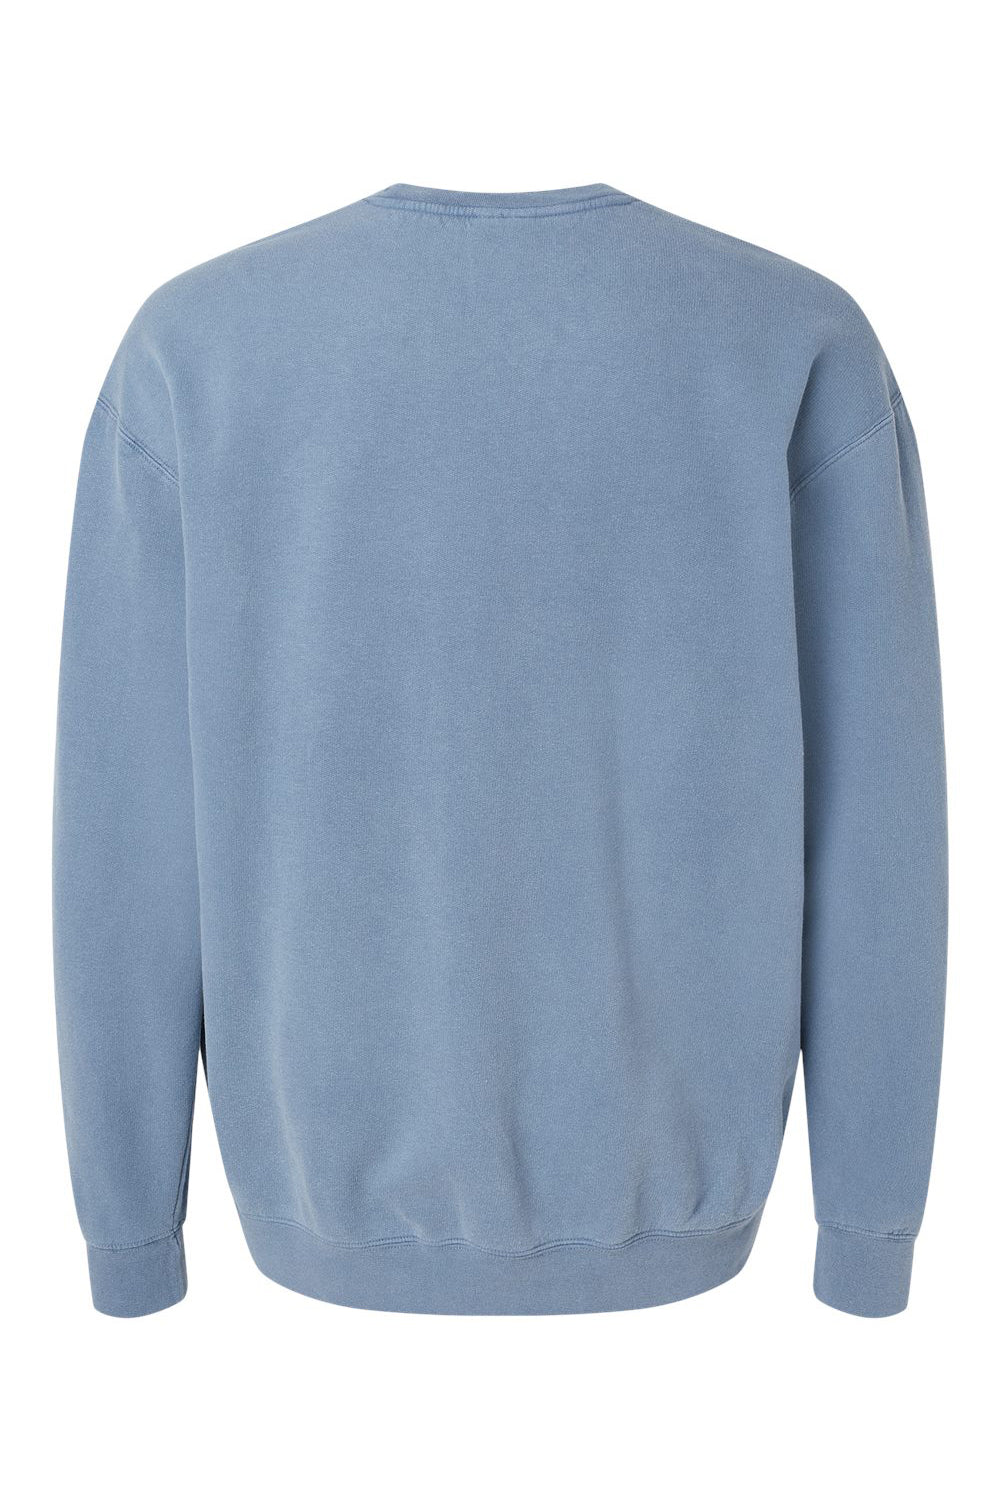 Comfort Colors 1466 Mens Garment Dyed Fleece Crewneck Sweatshirt Blue Jean Flat Back